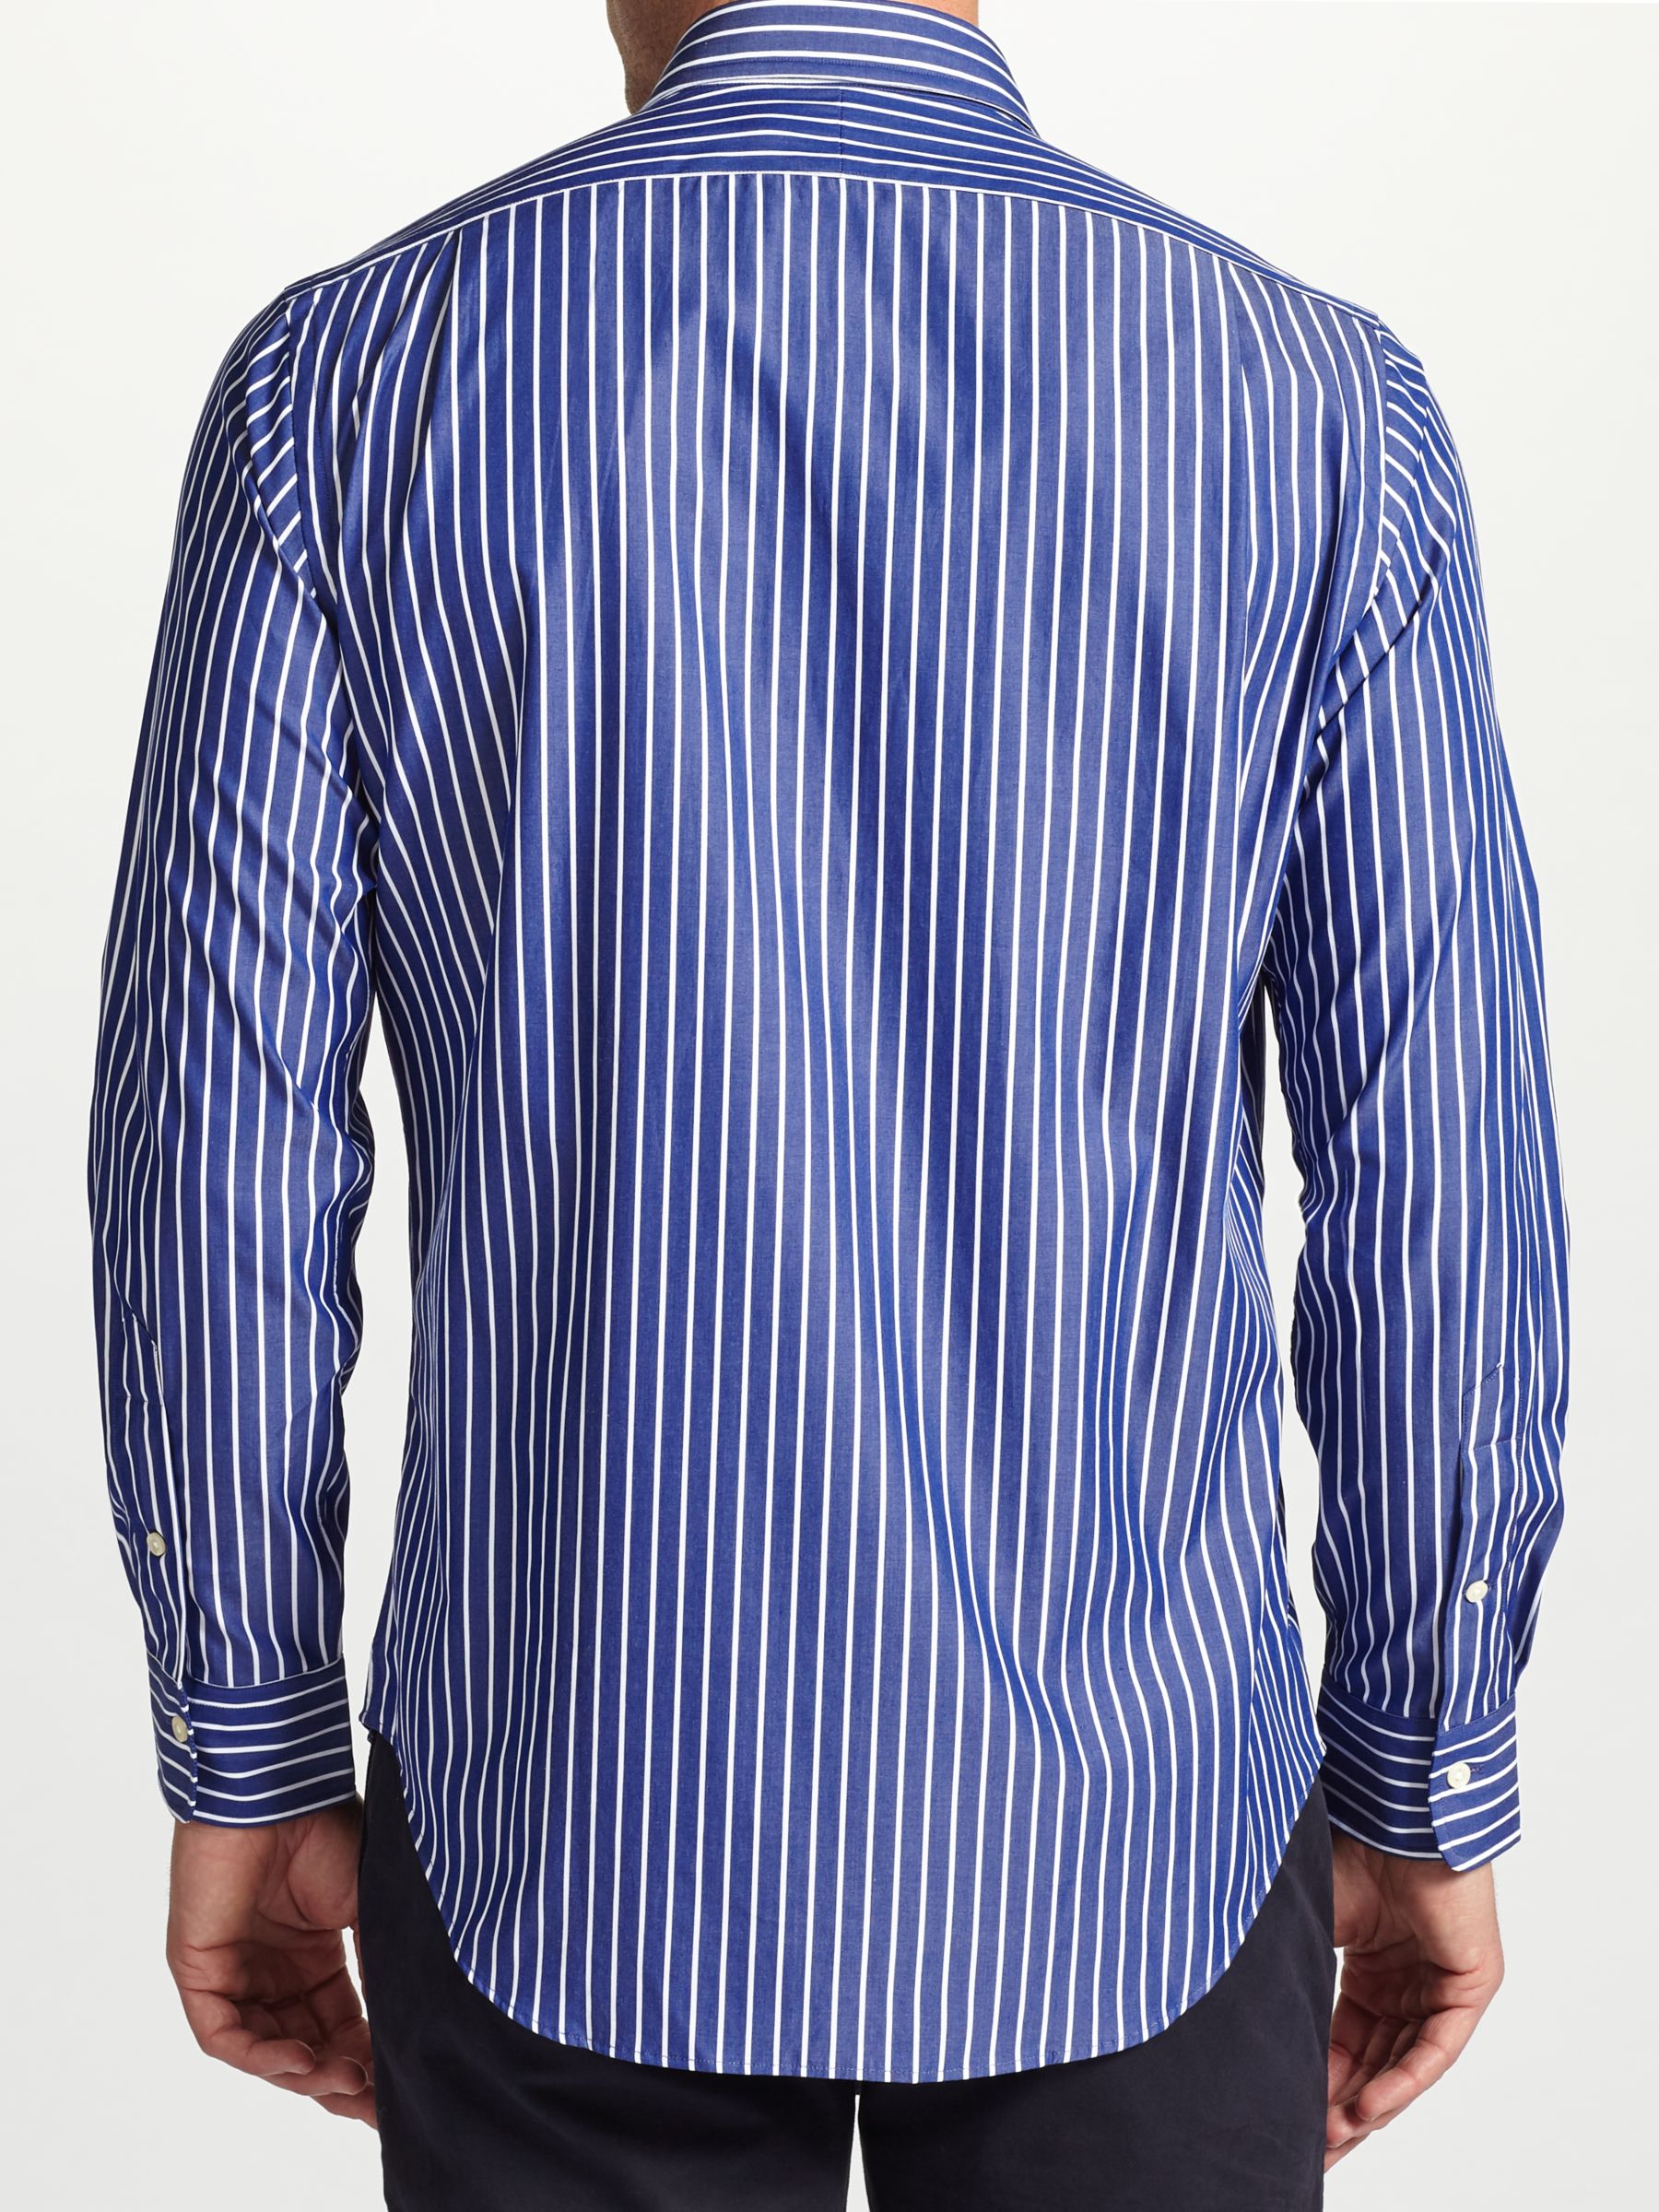 ralph lauren men's blue and white striped shirt